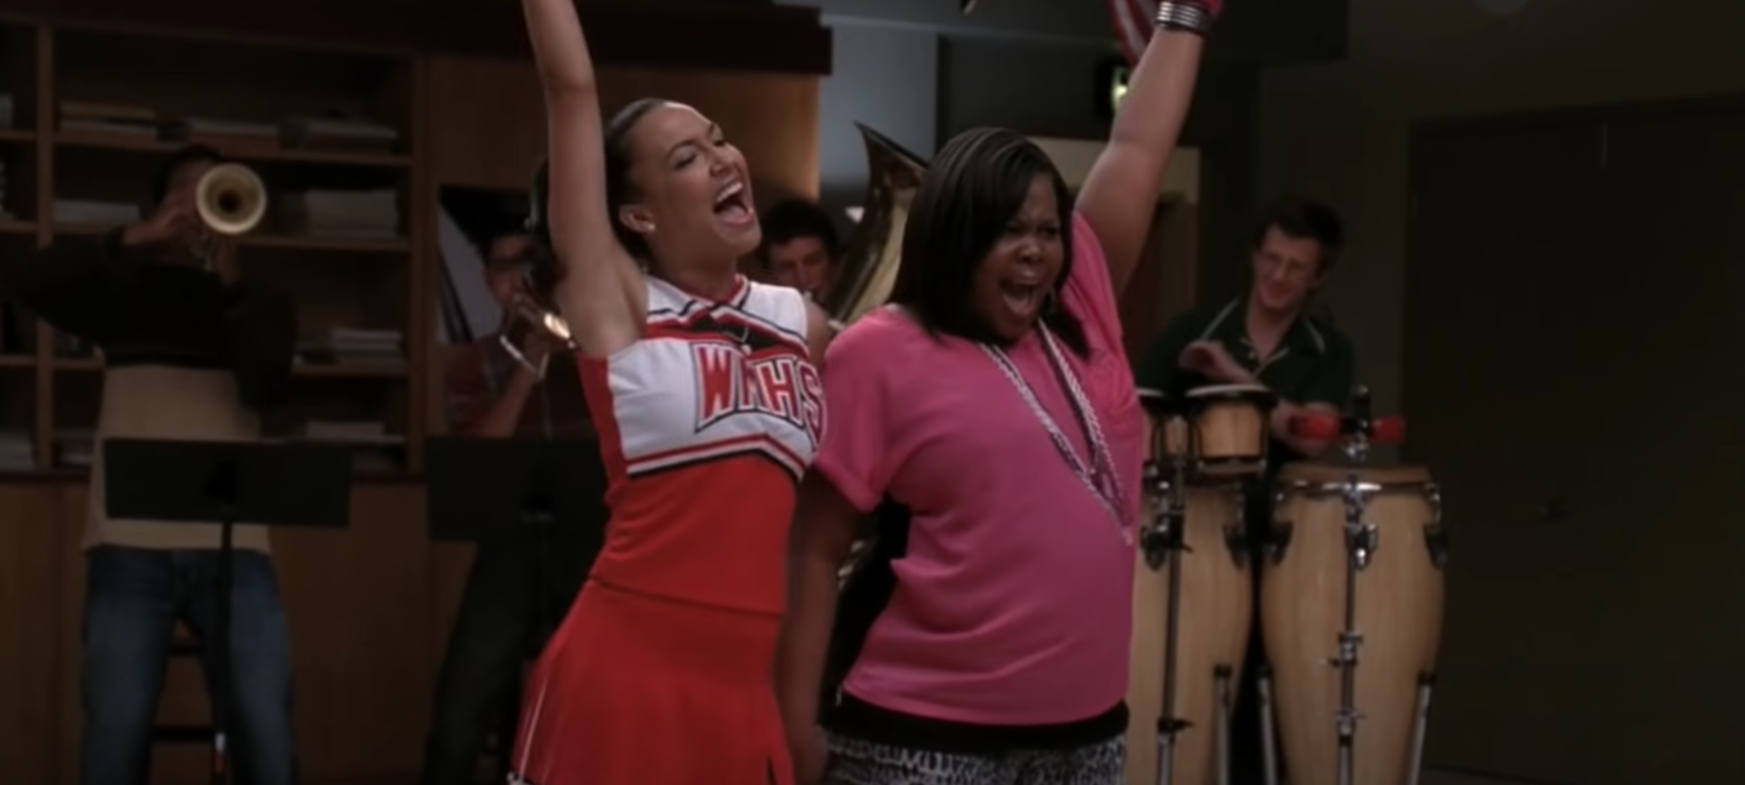 Santana Lopez wears her cheerleading uniform and Mercedes Jones wears a brightly colored shirt